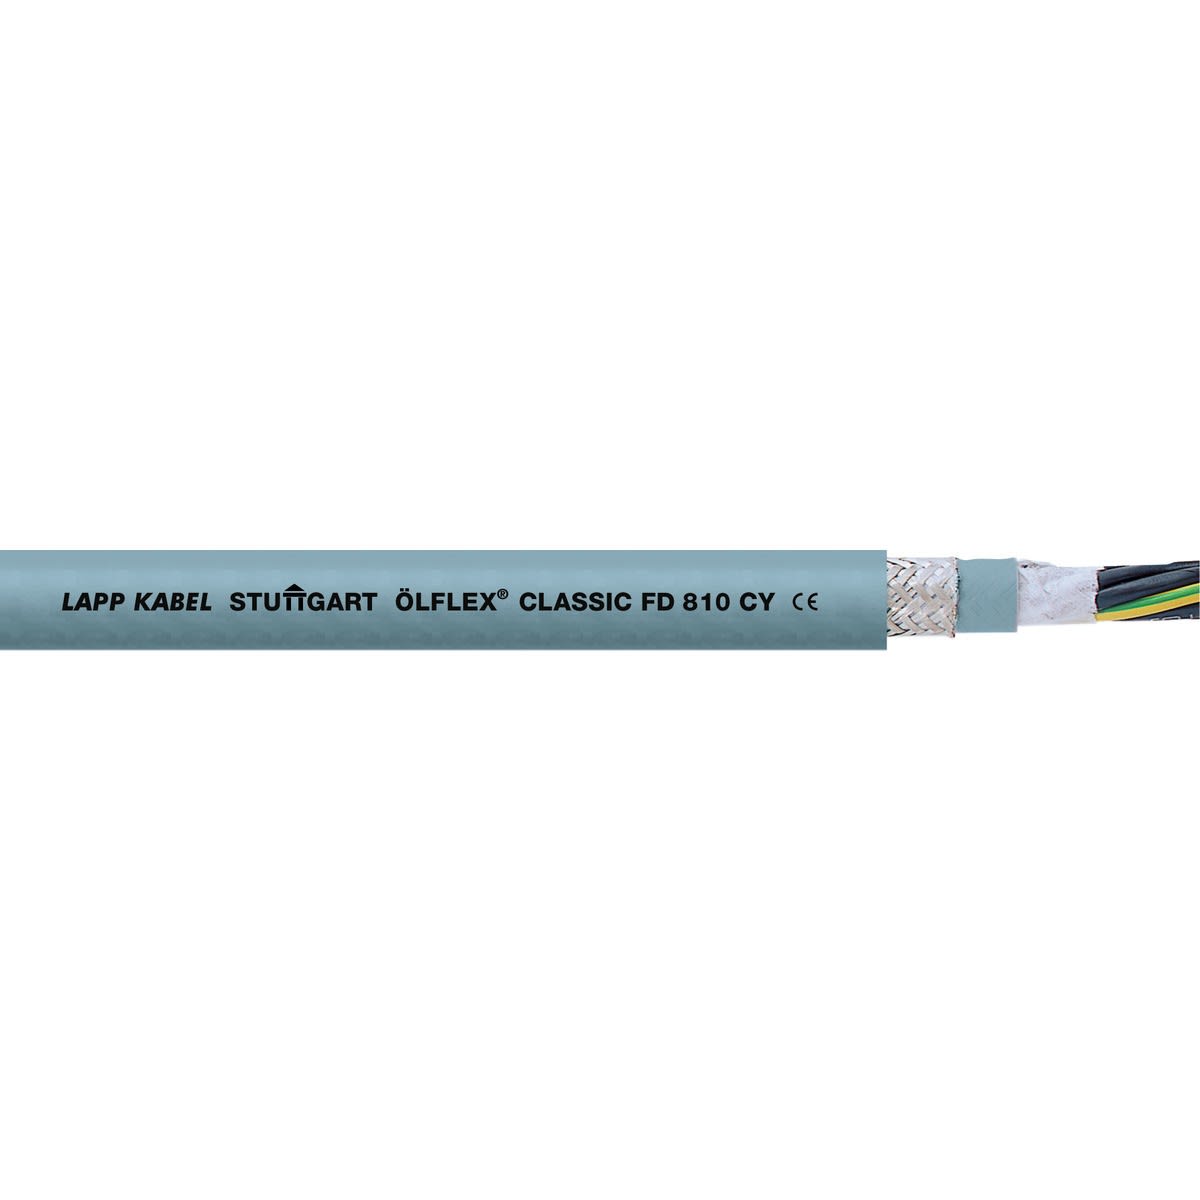 Lapp - oLFLEX CLASSIC FD 810 CY 25G1